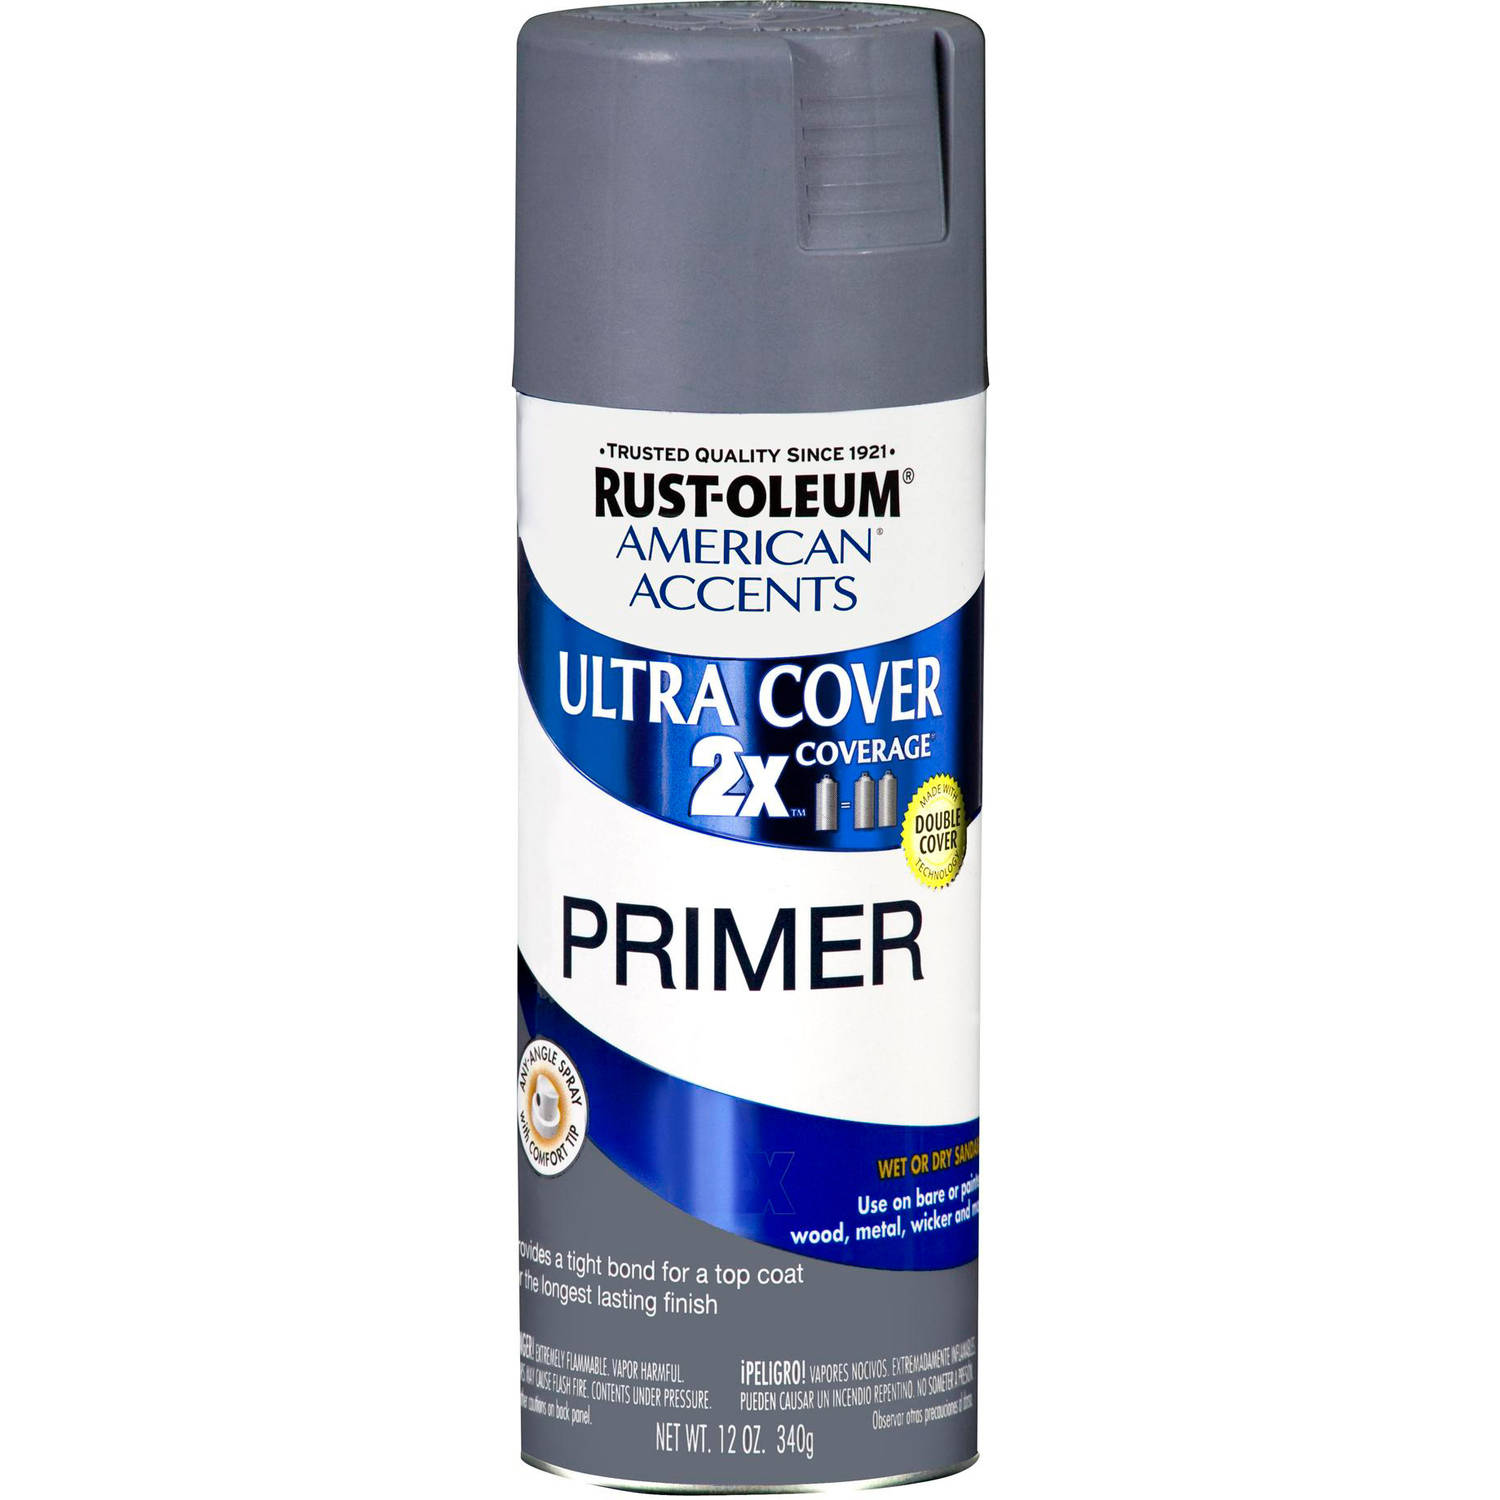 Rust-Oleum Flat Grey Primer Ultra Cover 2x - image 1 of 3